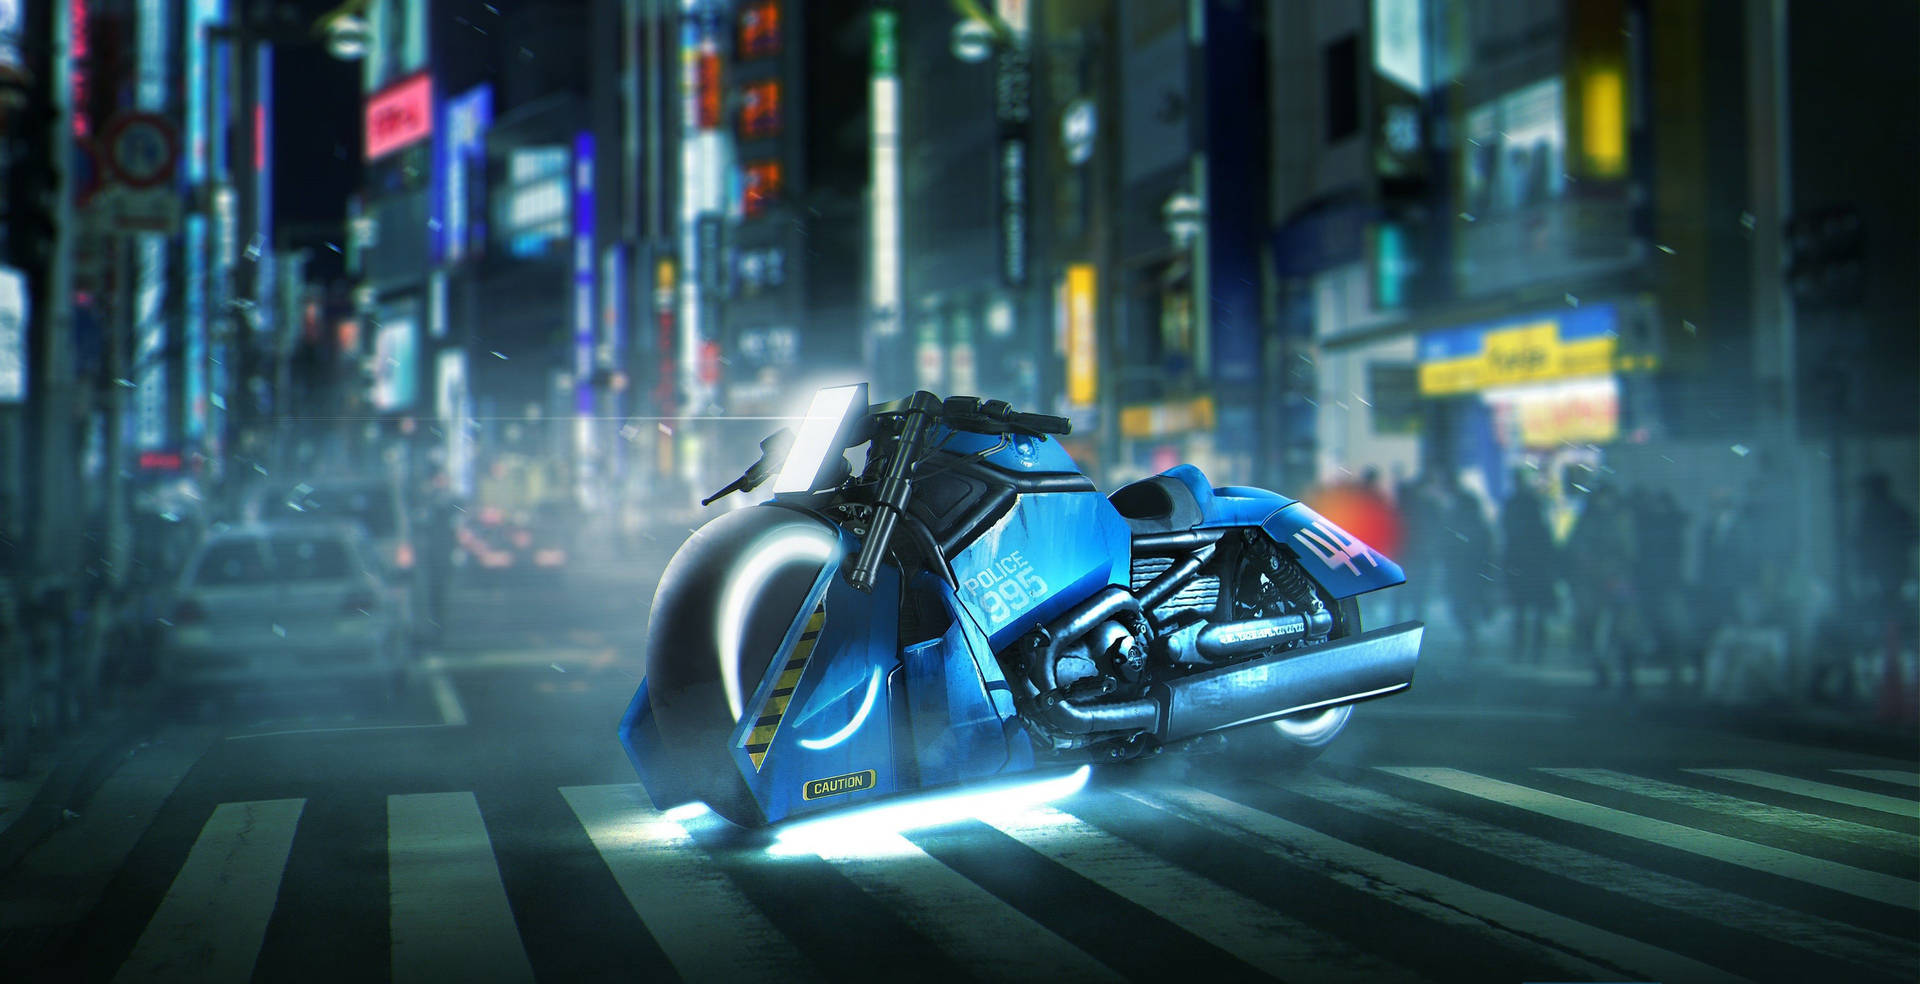 Blade Runner Futuristic Motorcycle Harley Davidson